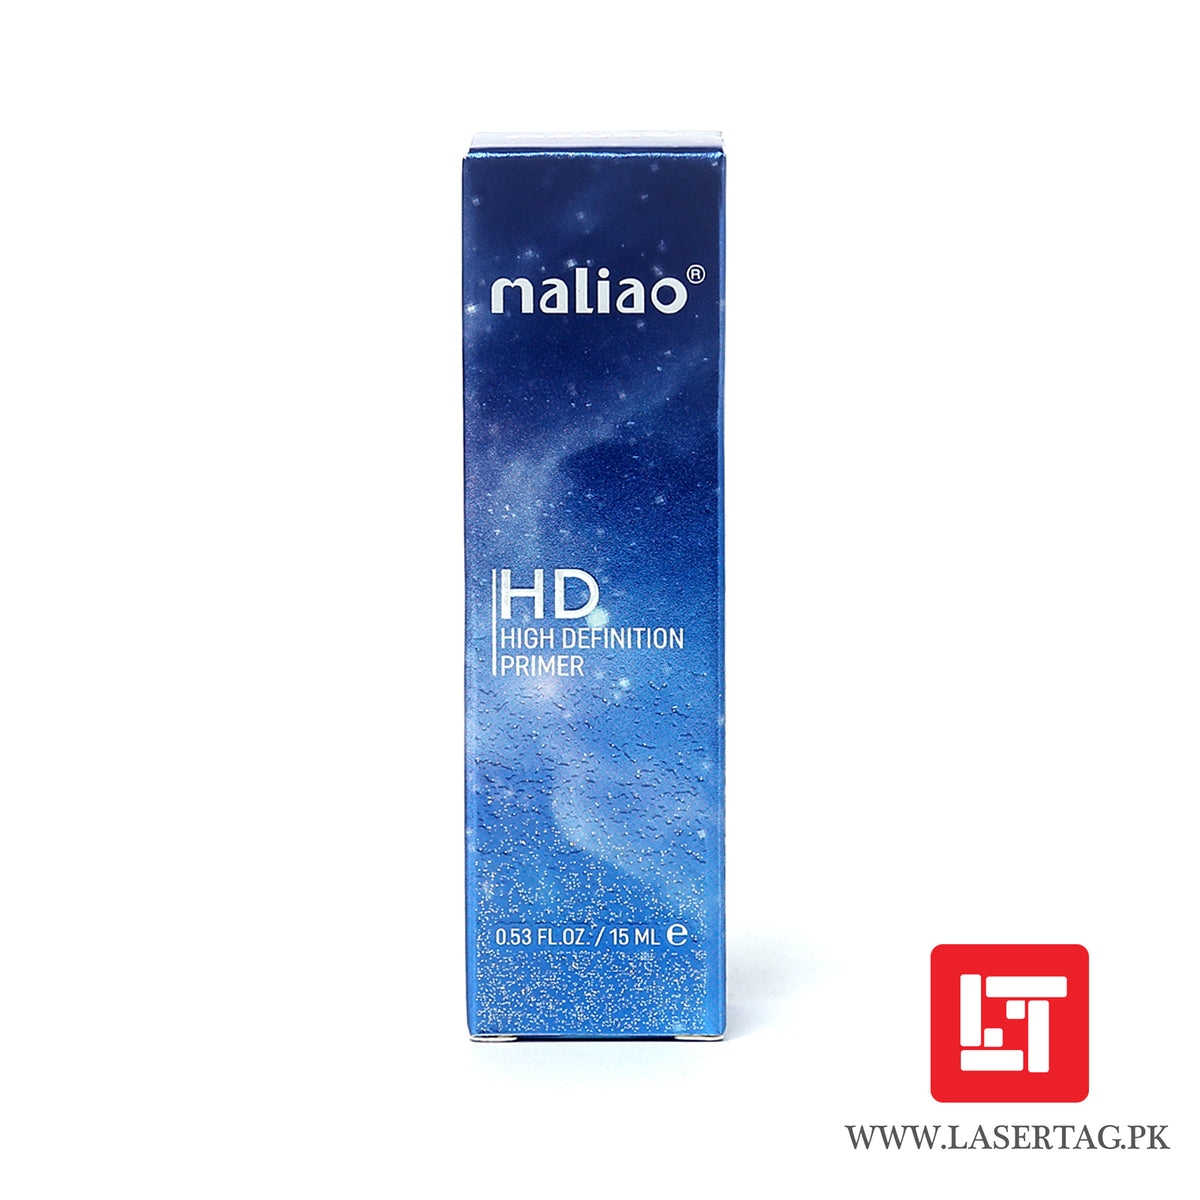 Maliao HD High Definition Primer M220 15ml freeshipping - lasertag.pk